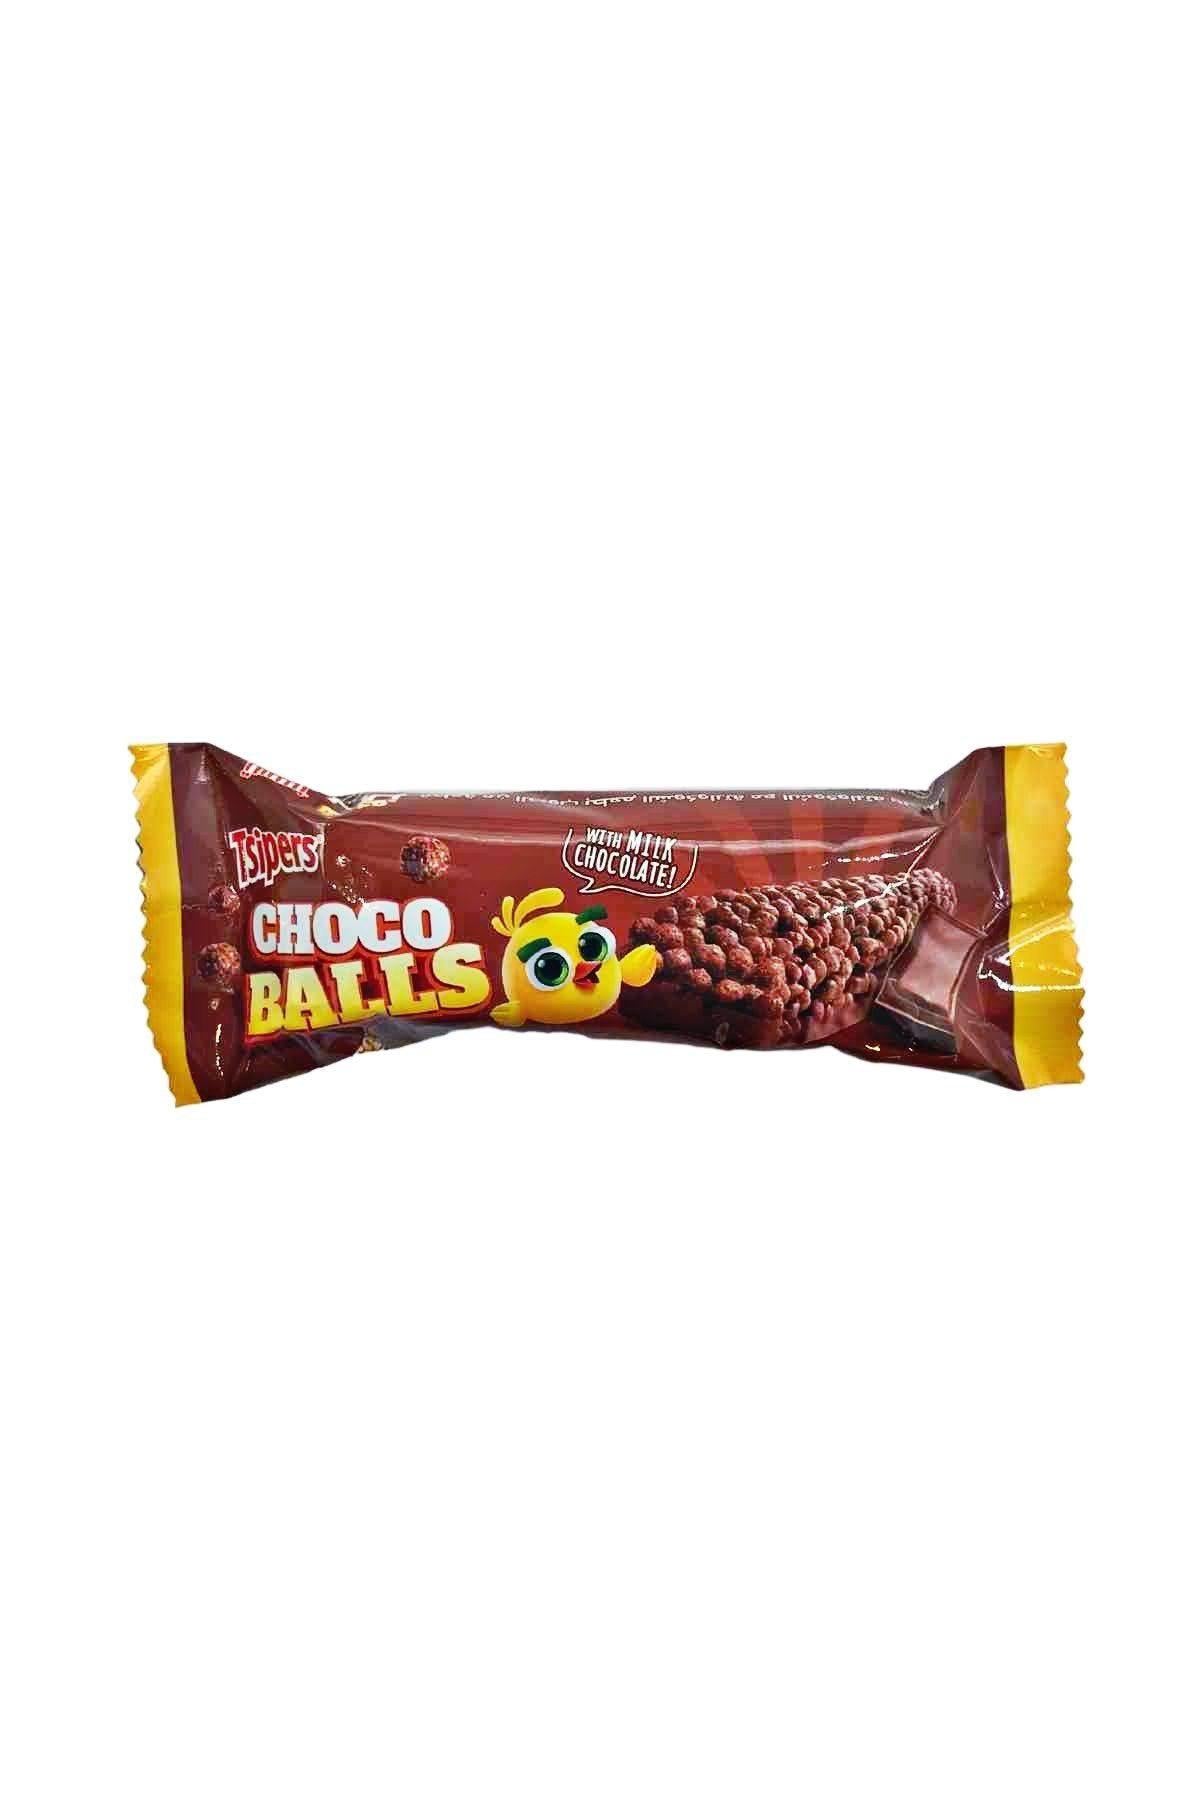 Tsipers Choco Balls Cereal Bar 16g